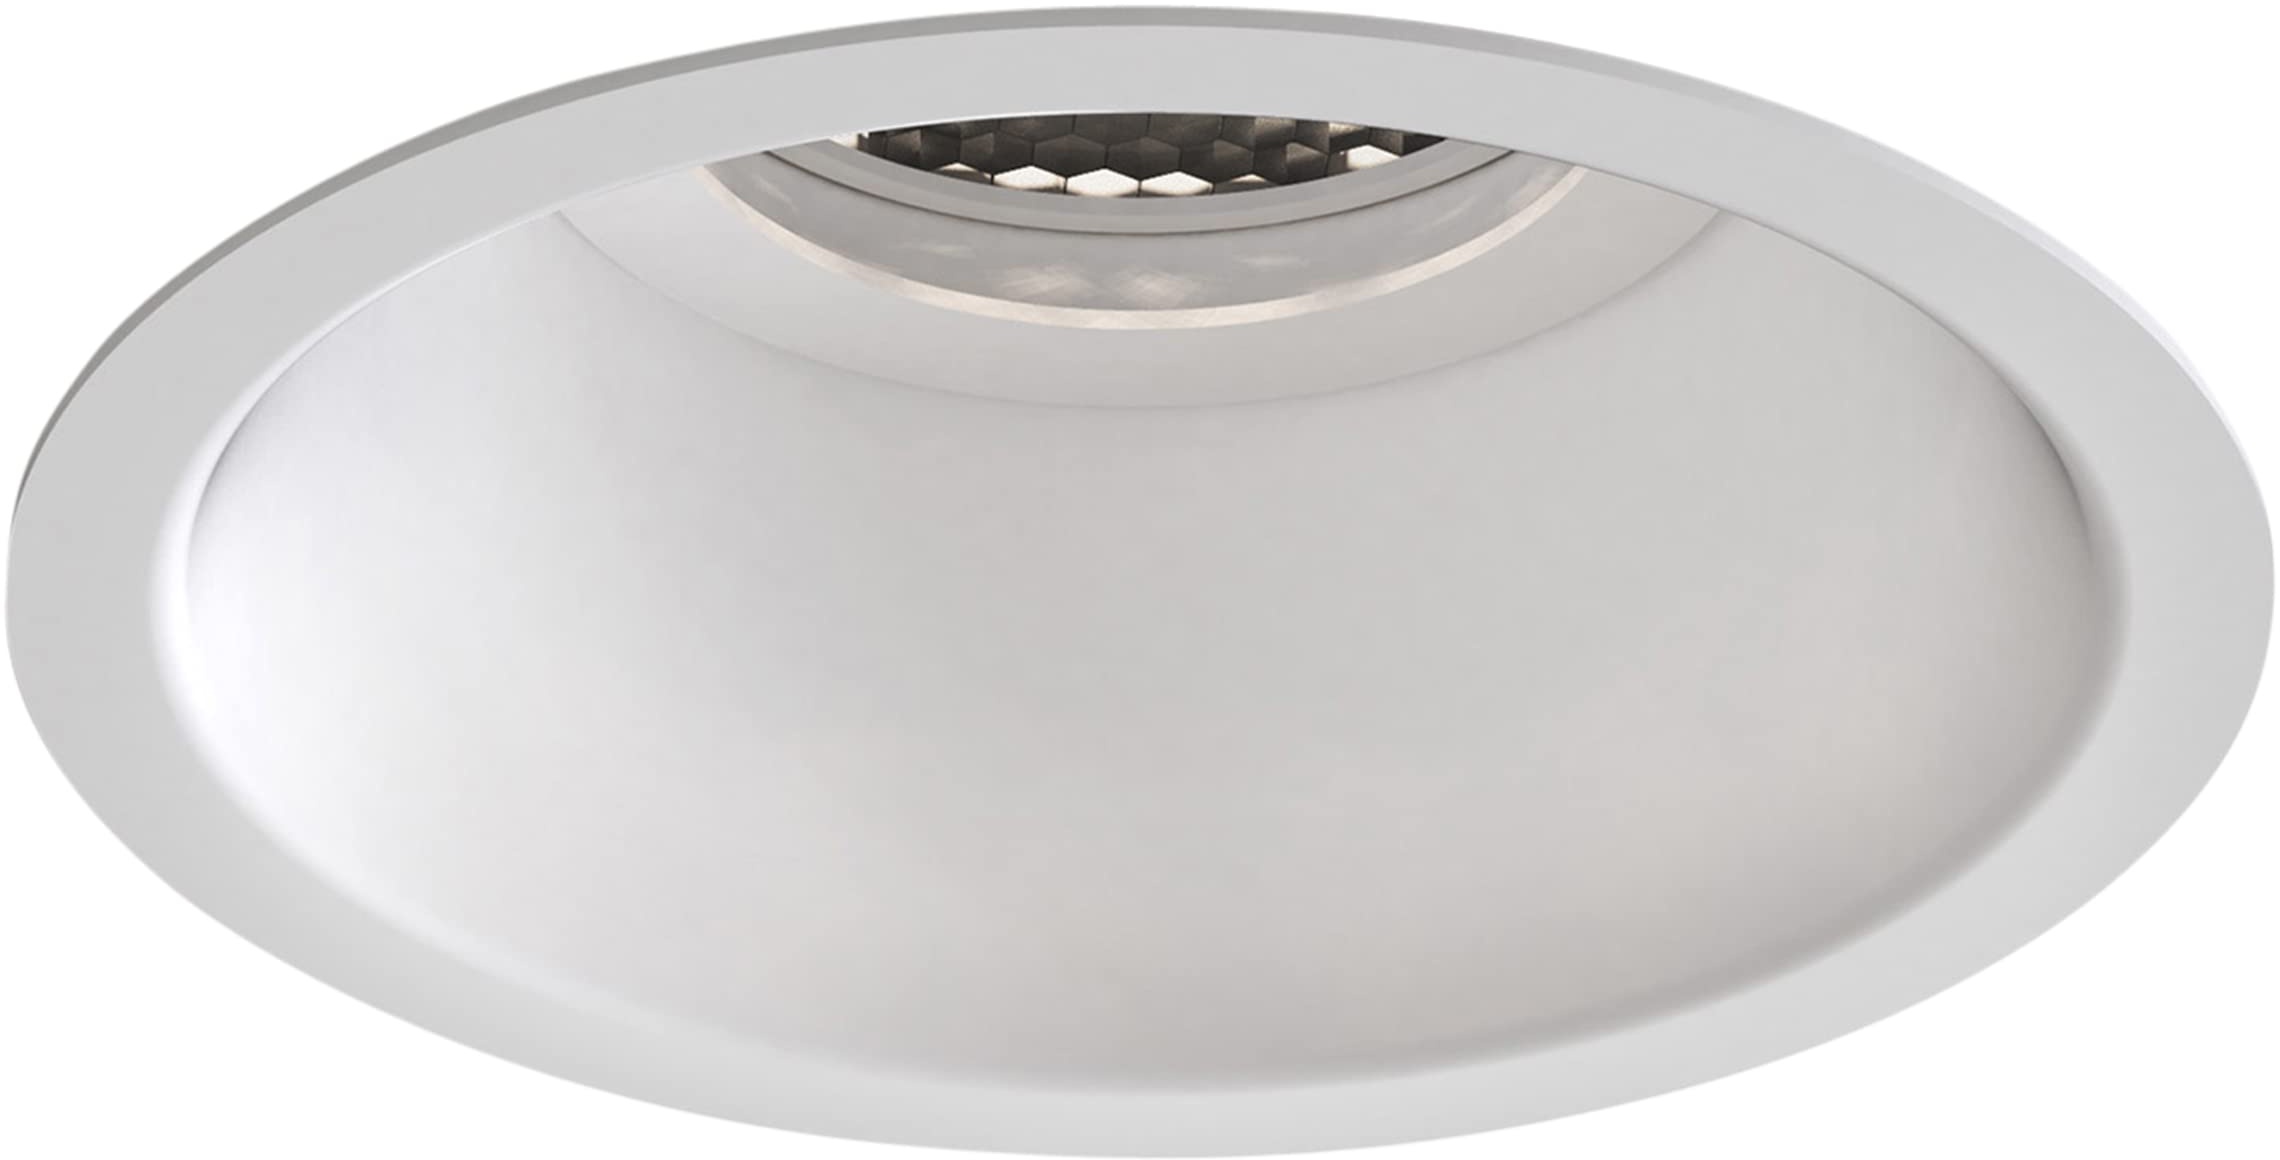 Astro Minima Slimline Round Fixed Fire-Rated IP65, Dimmable Badezimmer Downlight, IP65 Rated (Matt White) LED GU10, Designed in Britain – 1249034 – 3 Jahre Garantie